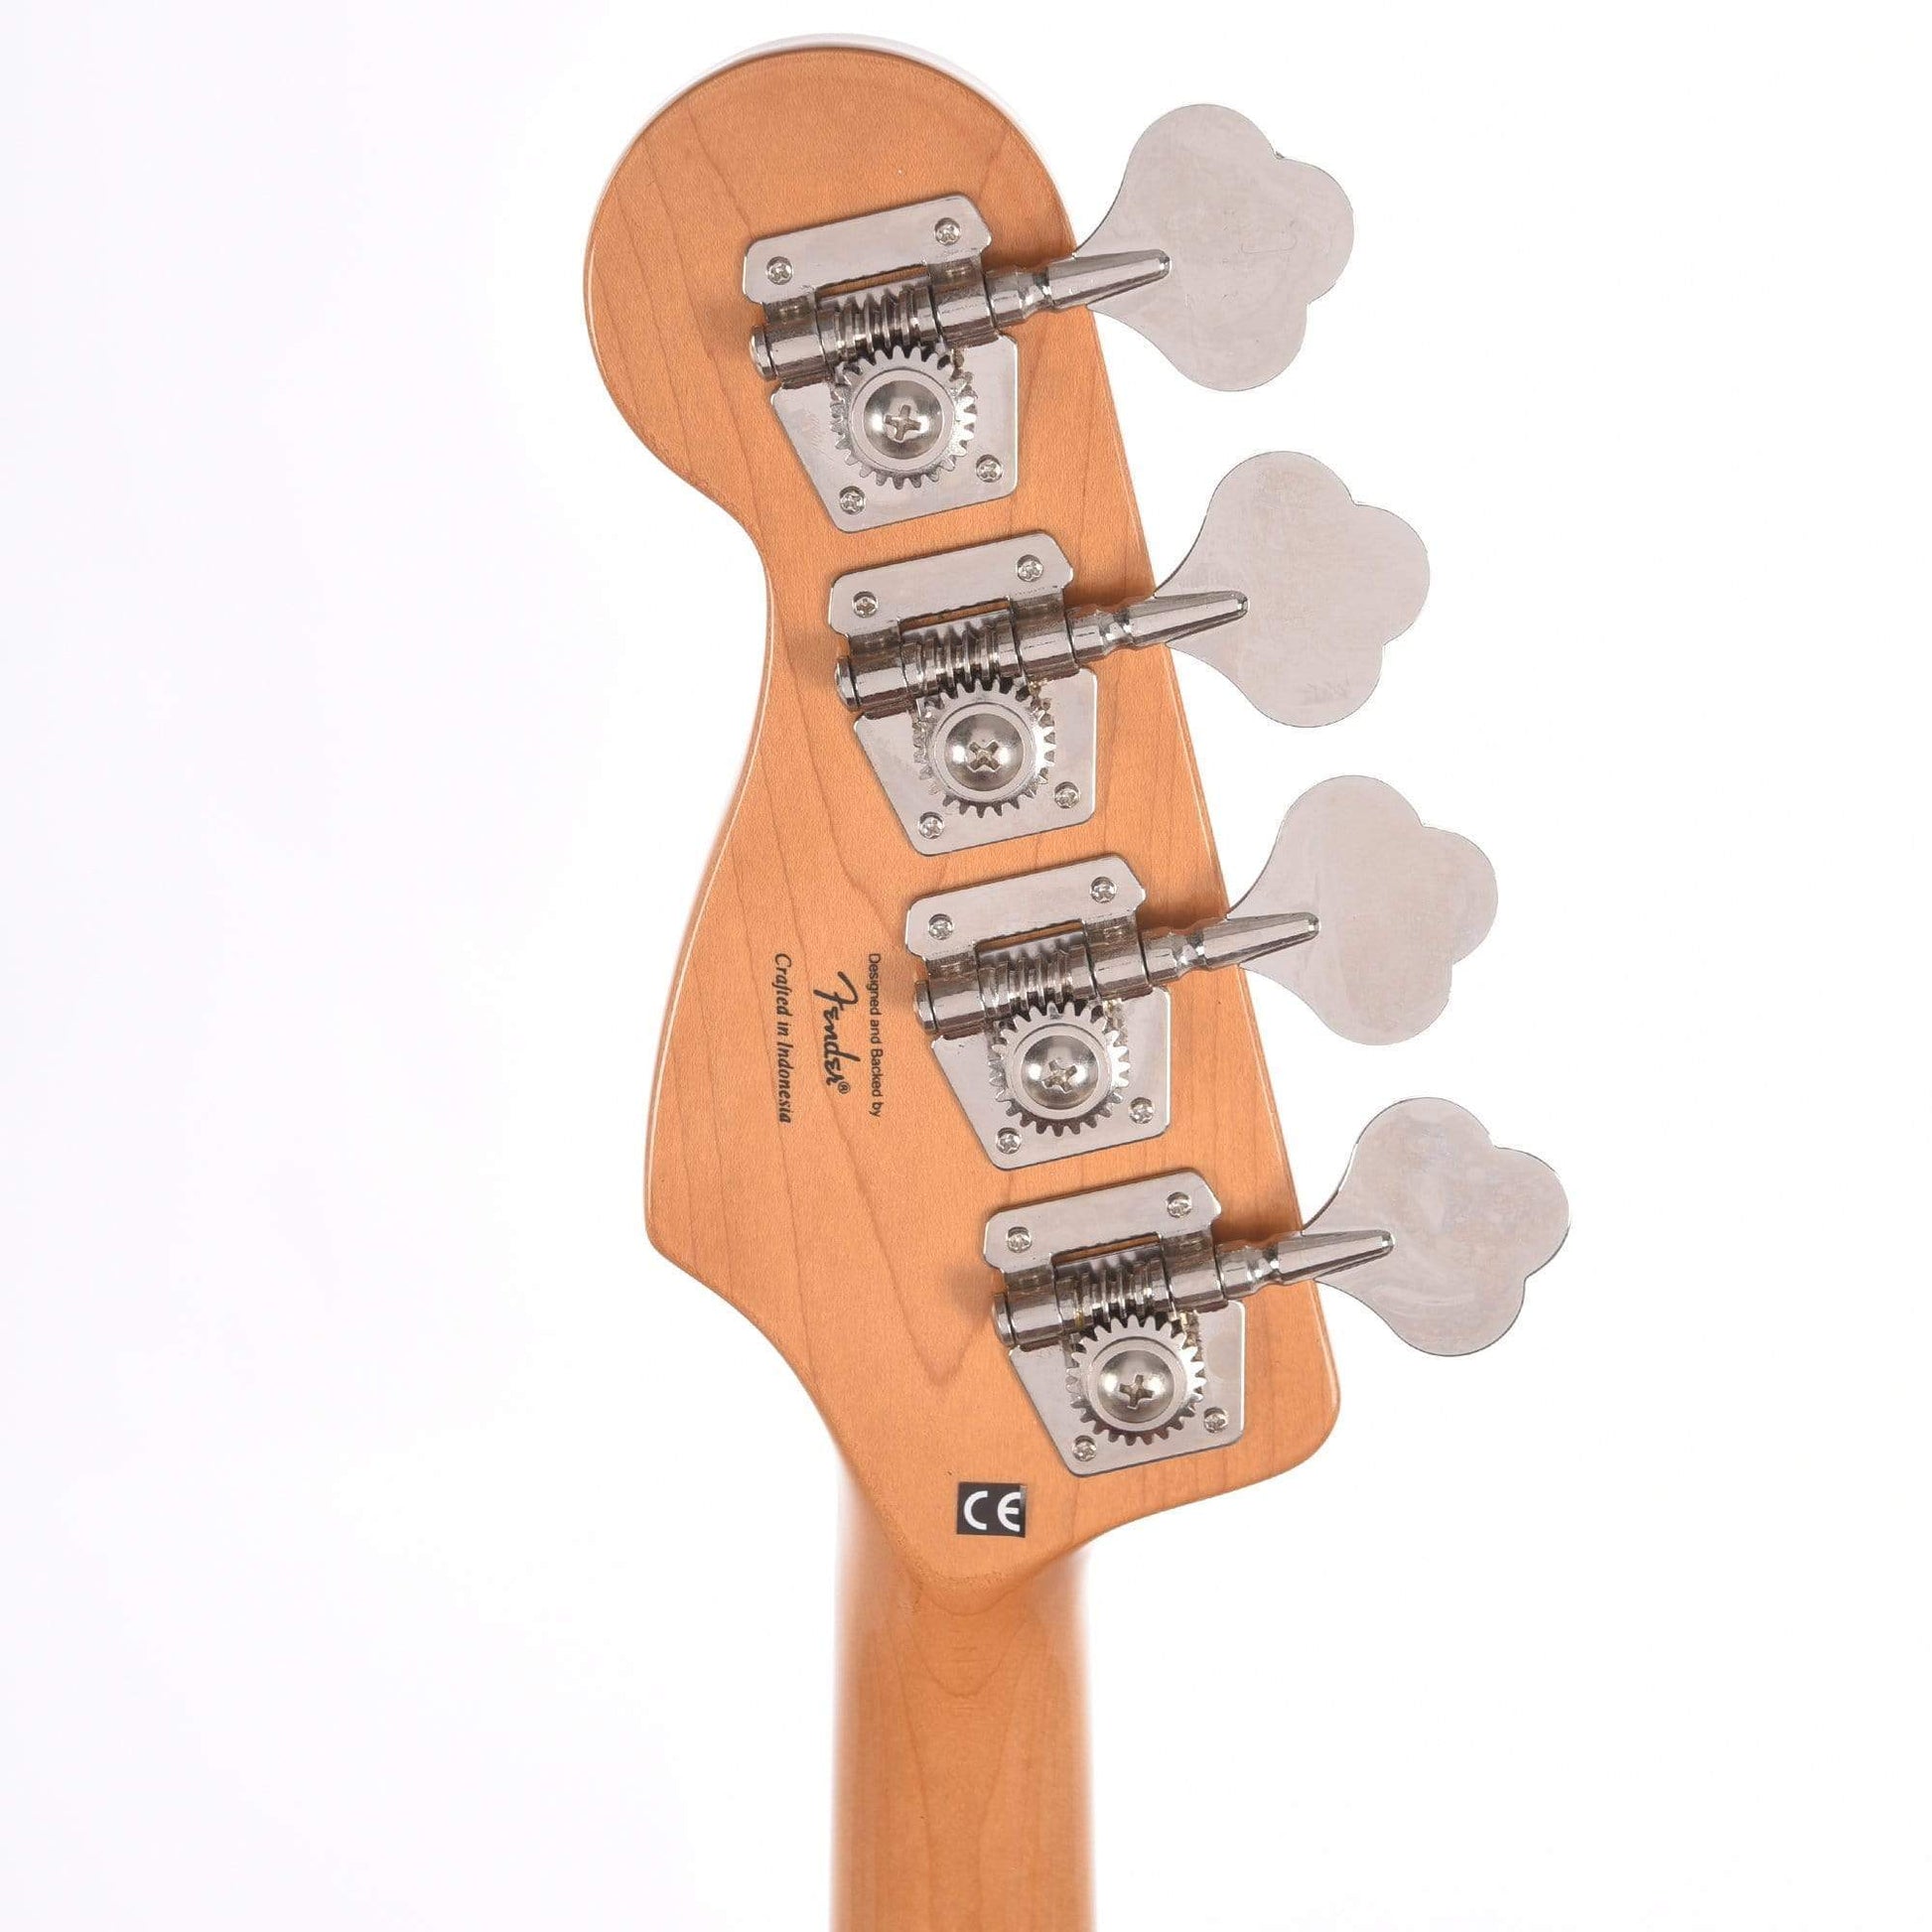 Squier Classic Vibe 60s Jazz Bass Fretless 3-Color Sunburst Bass Guitars / 4-String